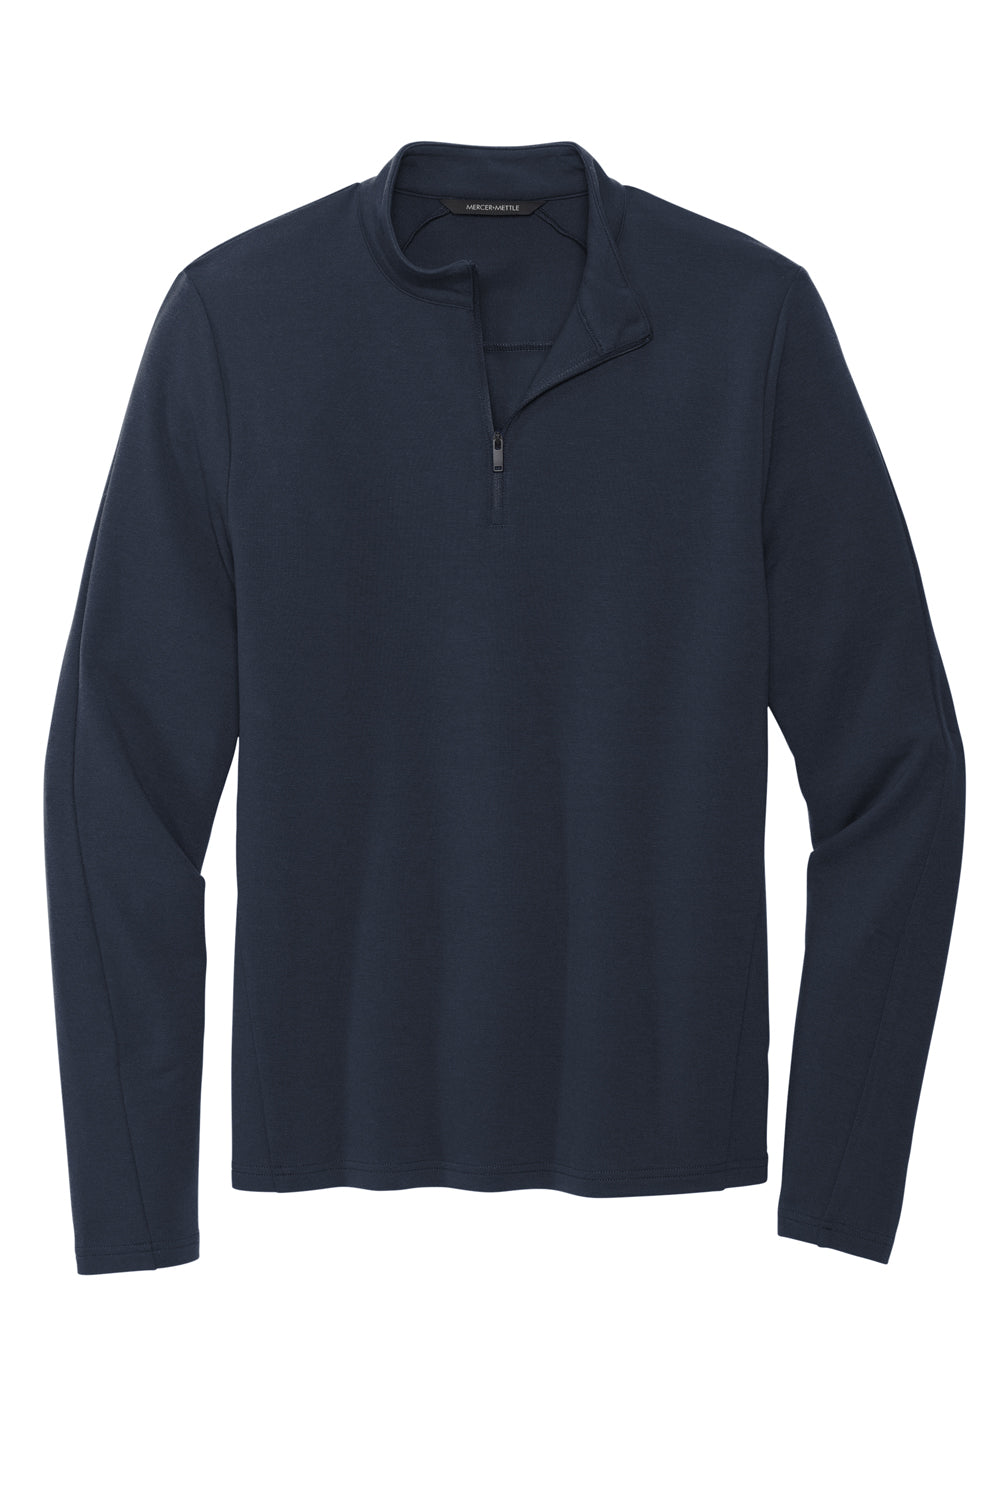 Mercer+Mettle MM3010 Stretch 1/4 Zip Sweatshirt Night Navy Blue Flat Front